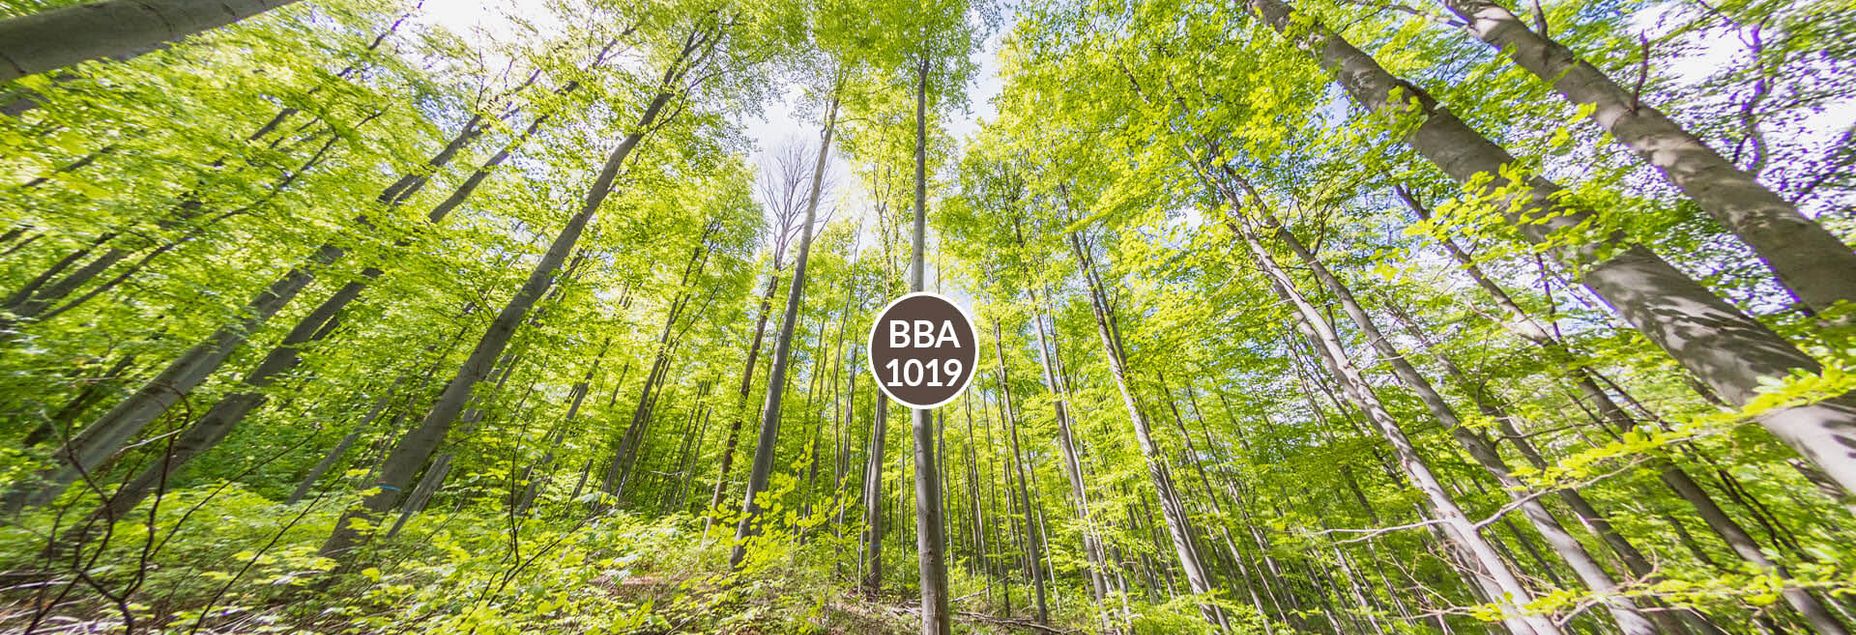 Baum BBA 1019 - Fisheyeperspektive